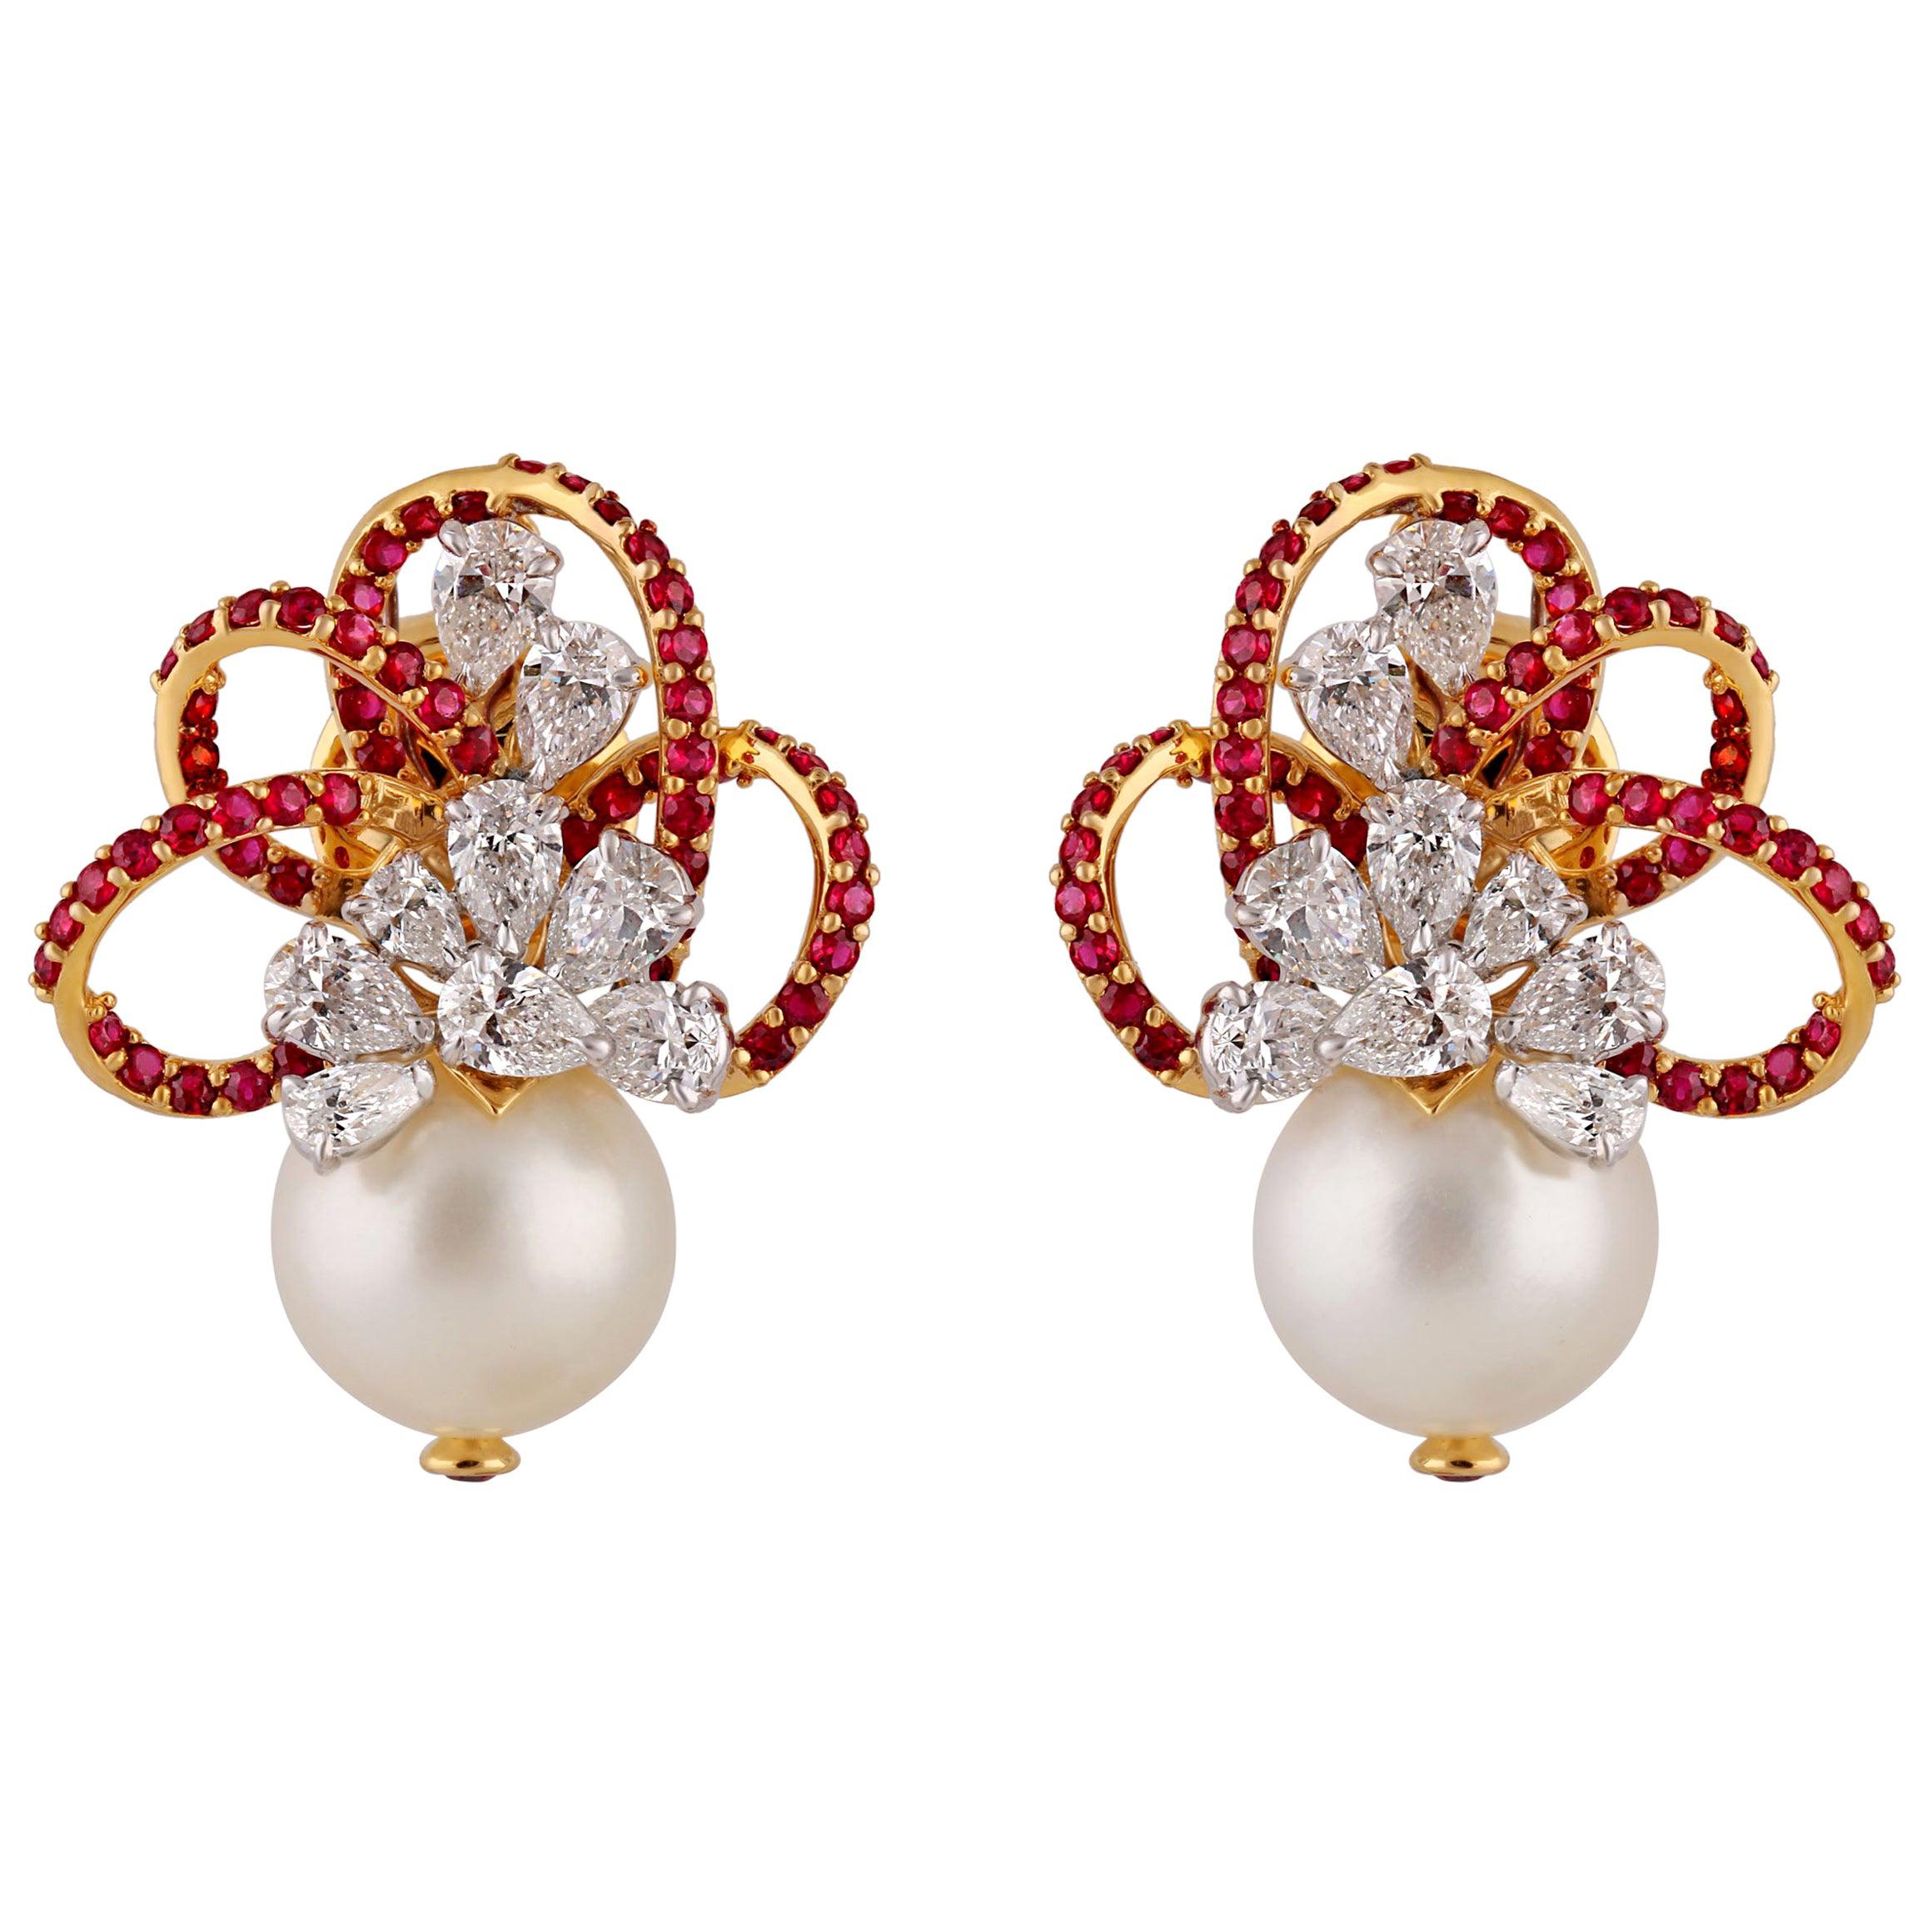 Studio Rêves Diamond and Rubies with Pearls Earrings in 18 Karat Gold For Sale